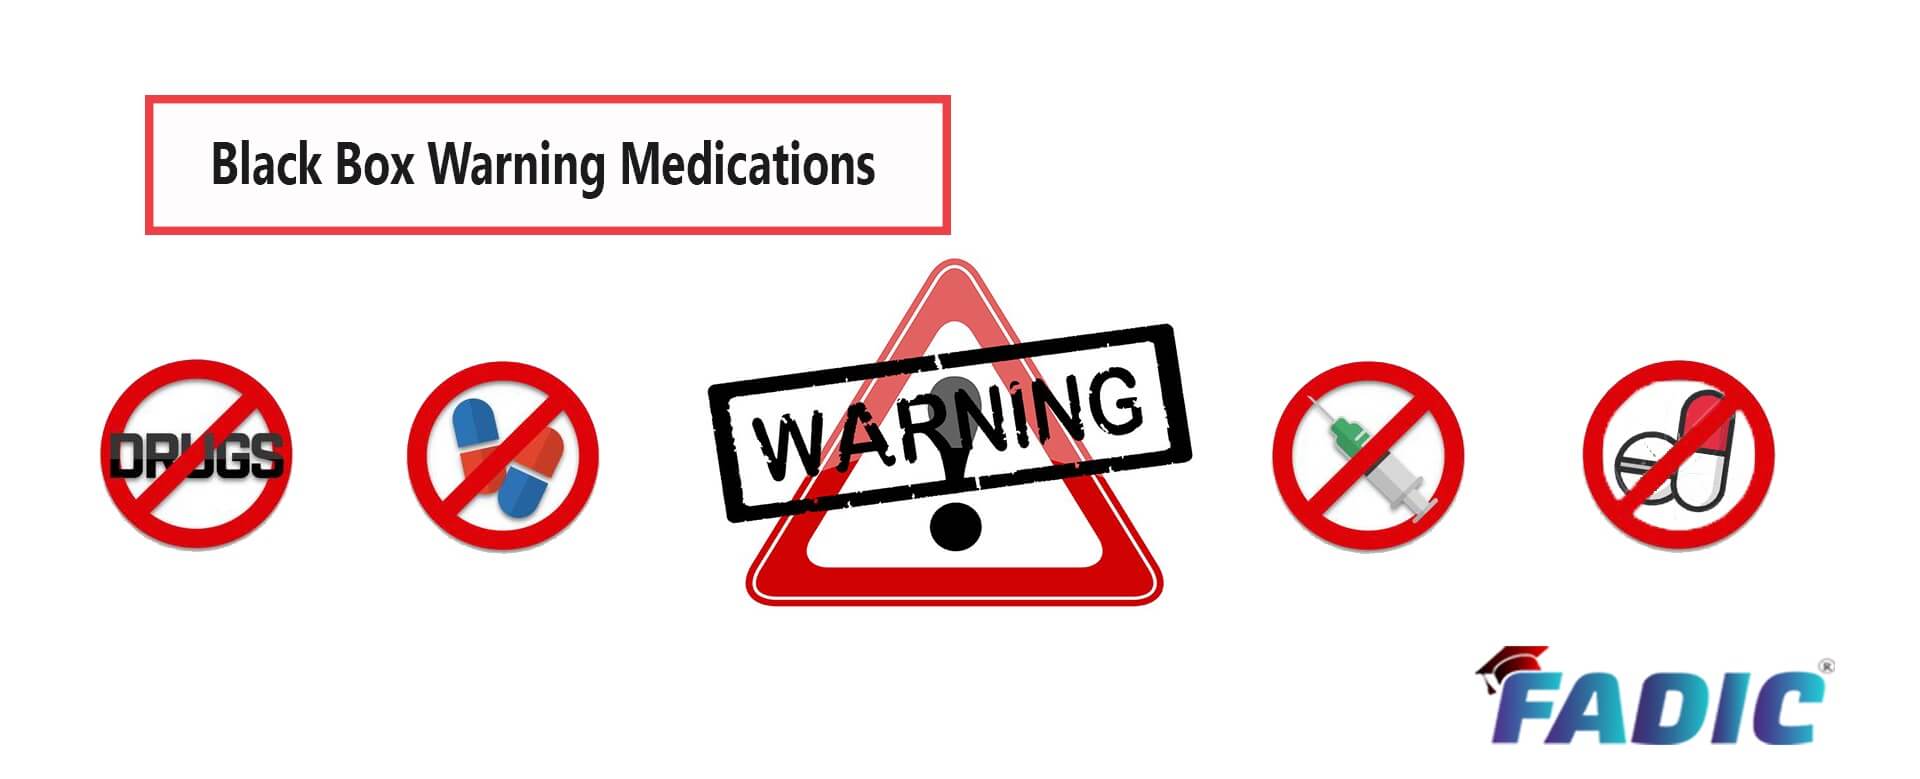 Black Box Warning List of Medications from FADIC